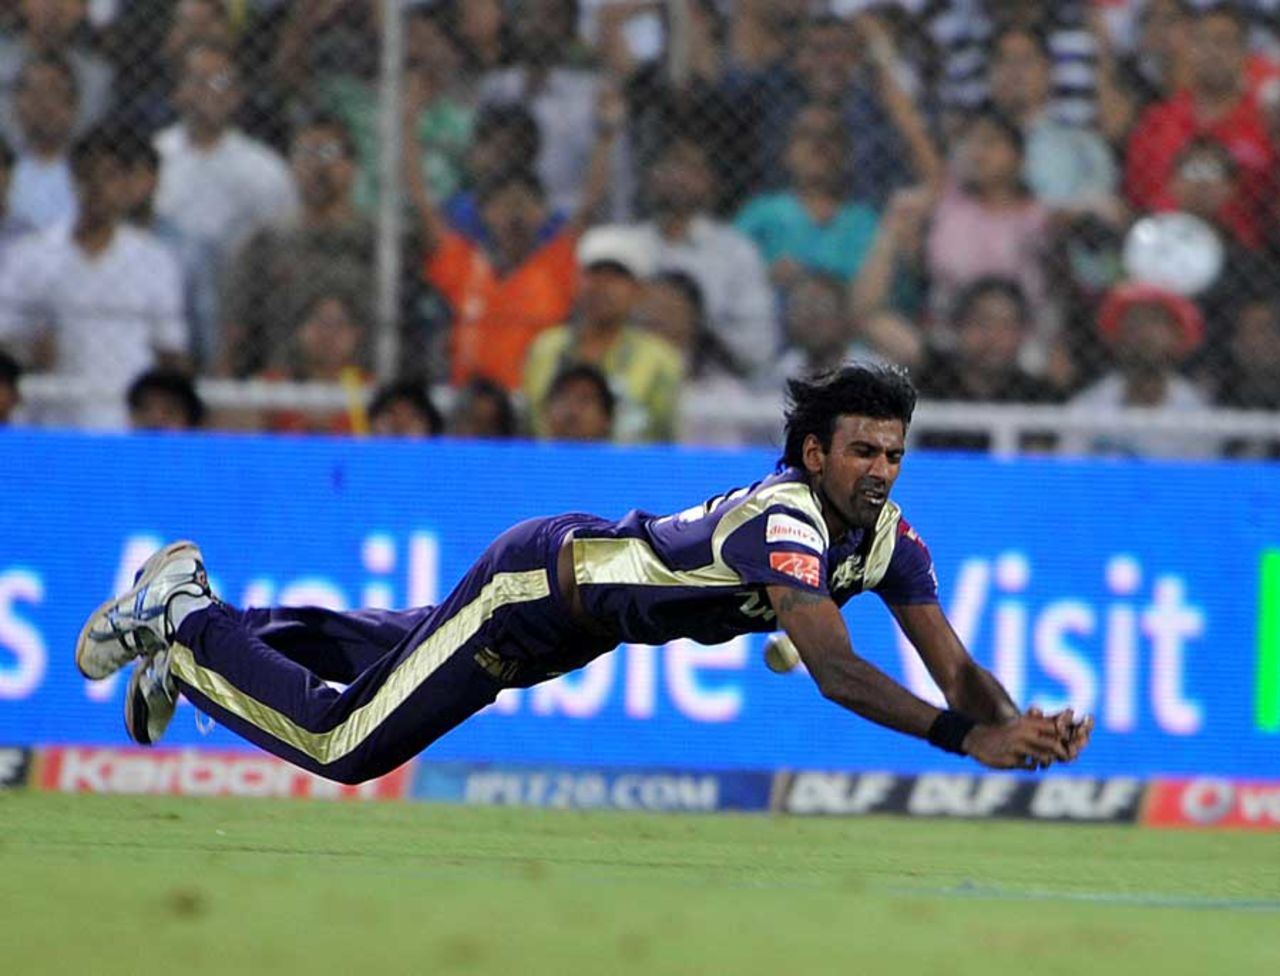 L Balaji spills a chance, Pune Warriors v Kolkata Knight Riders, IPL 2011, Navi Mumbai, May 19, 2011